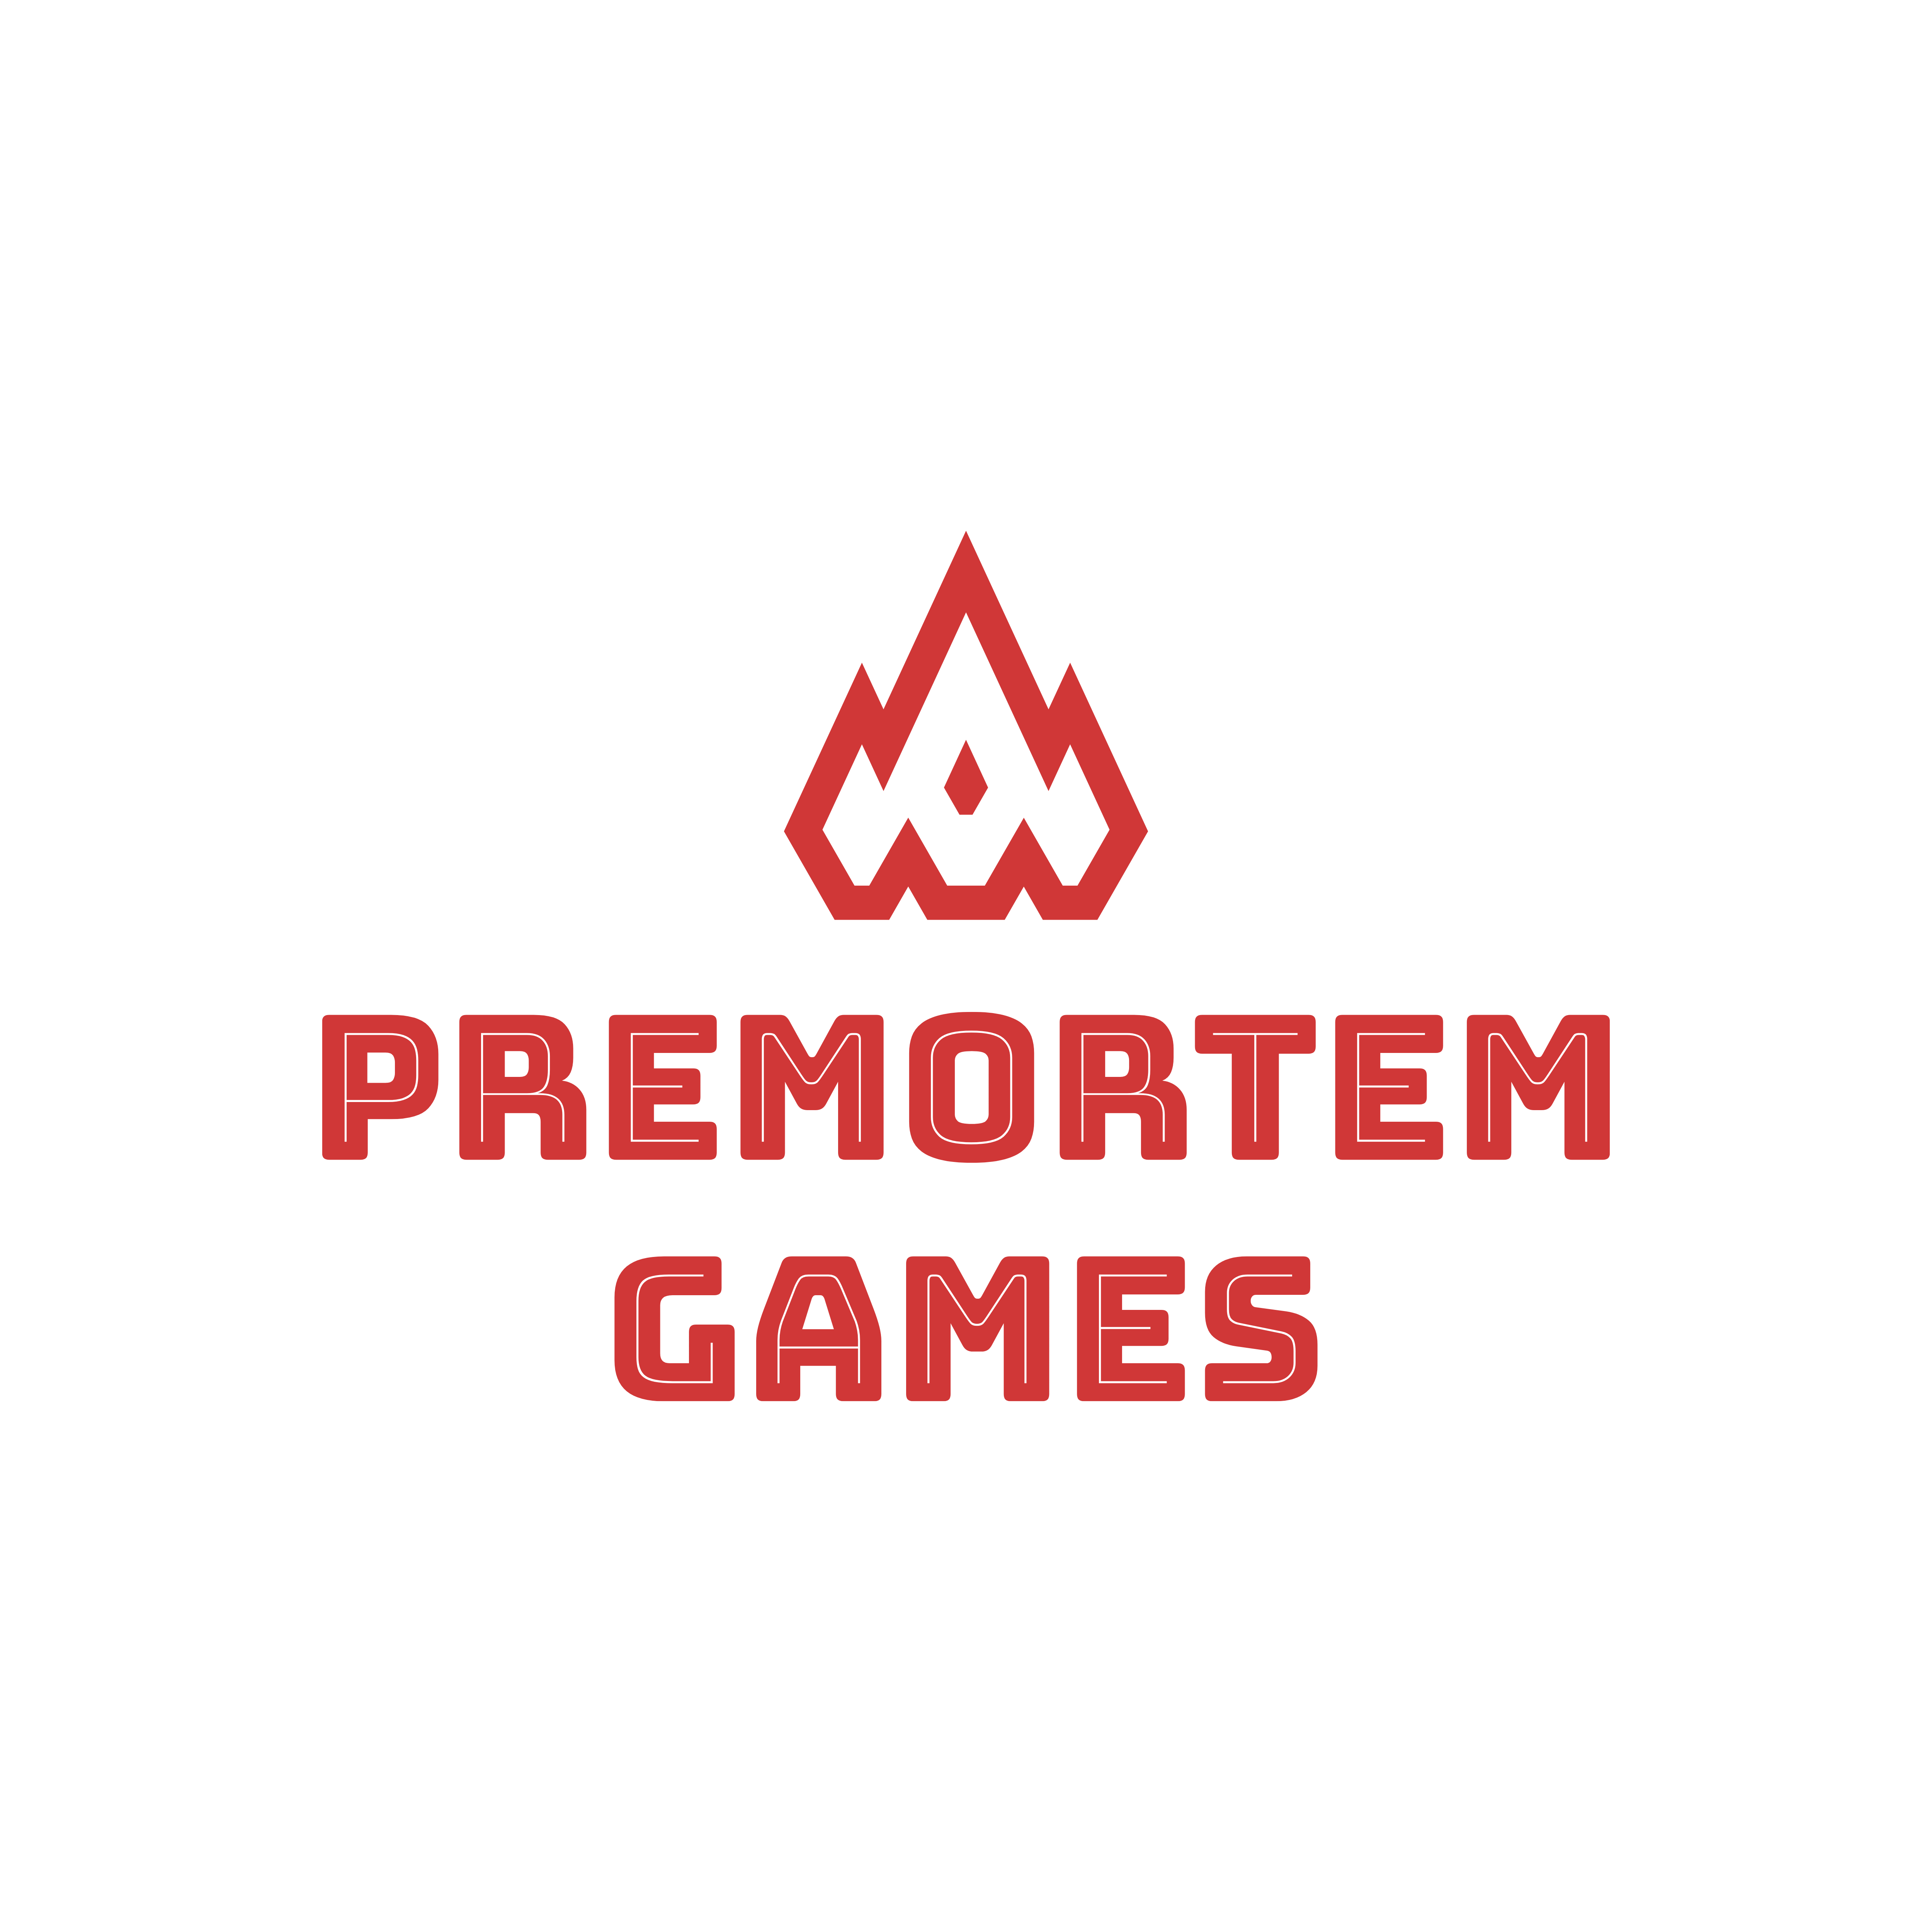 BitCake Studio builds online multiplayer game Atomic Picnic completely  remote - PreMortem Games